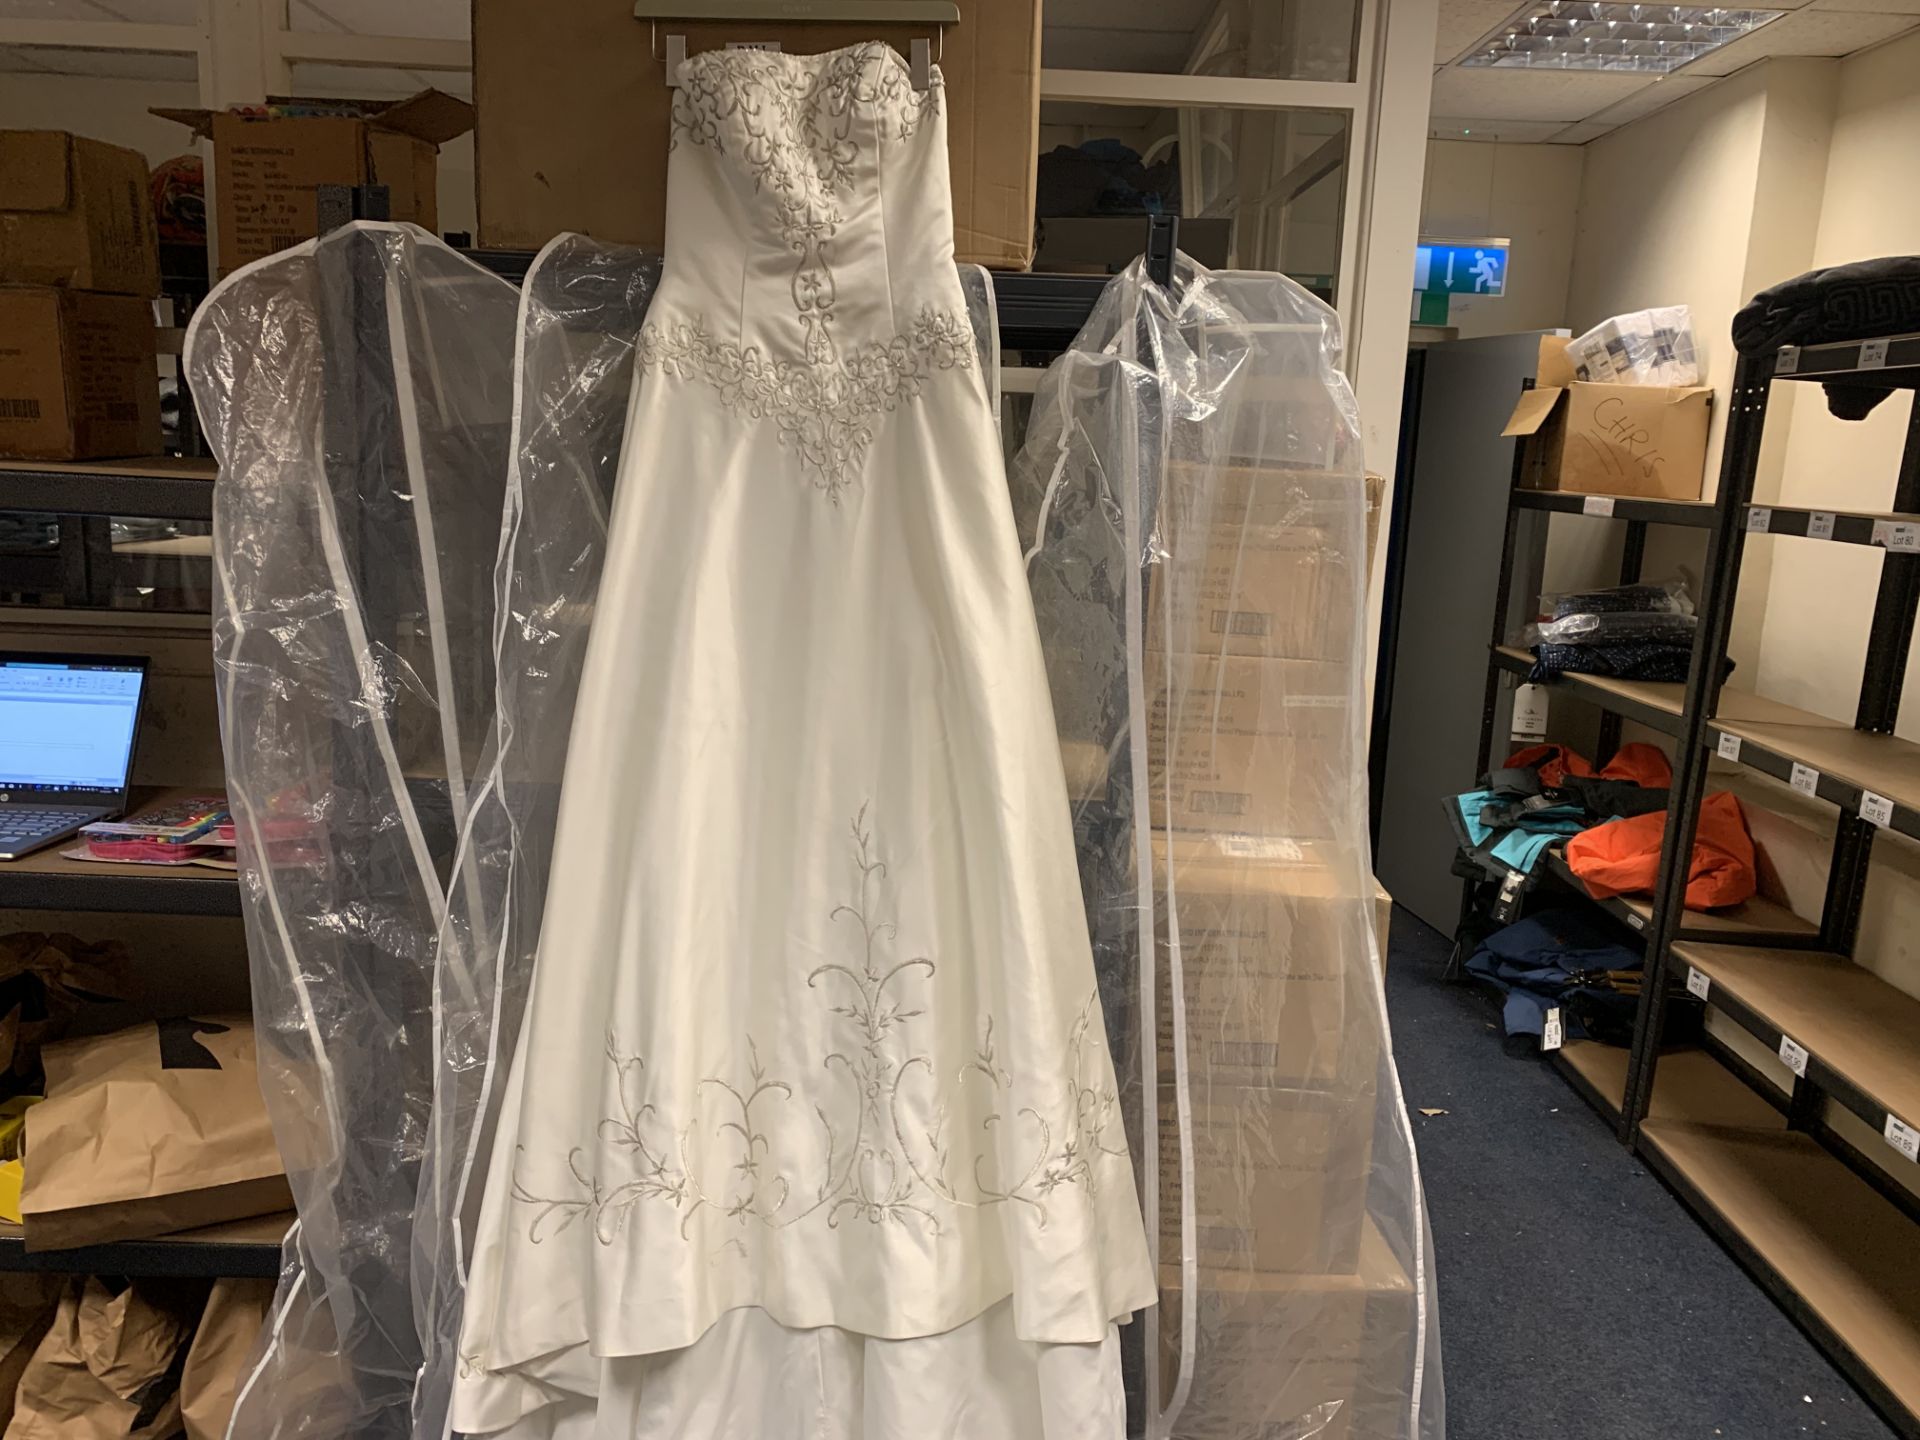 UNKNOWN SIZE WHITE WEDDING DRESS